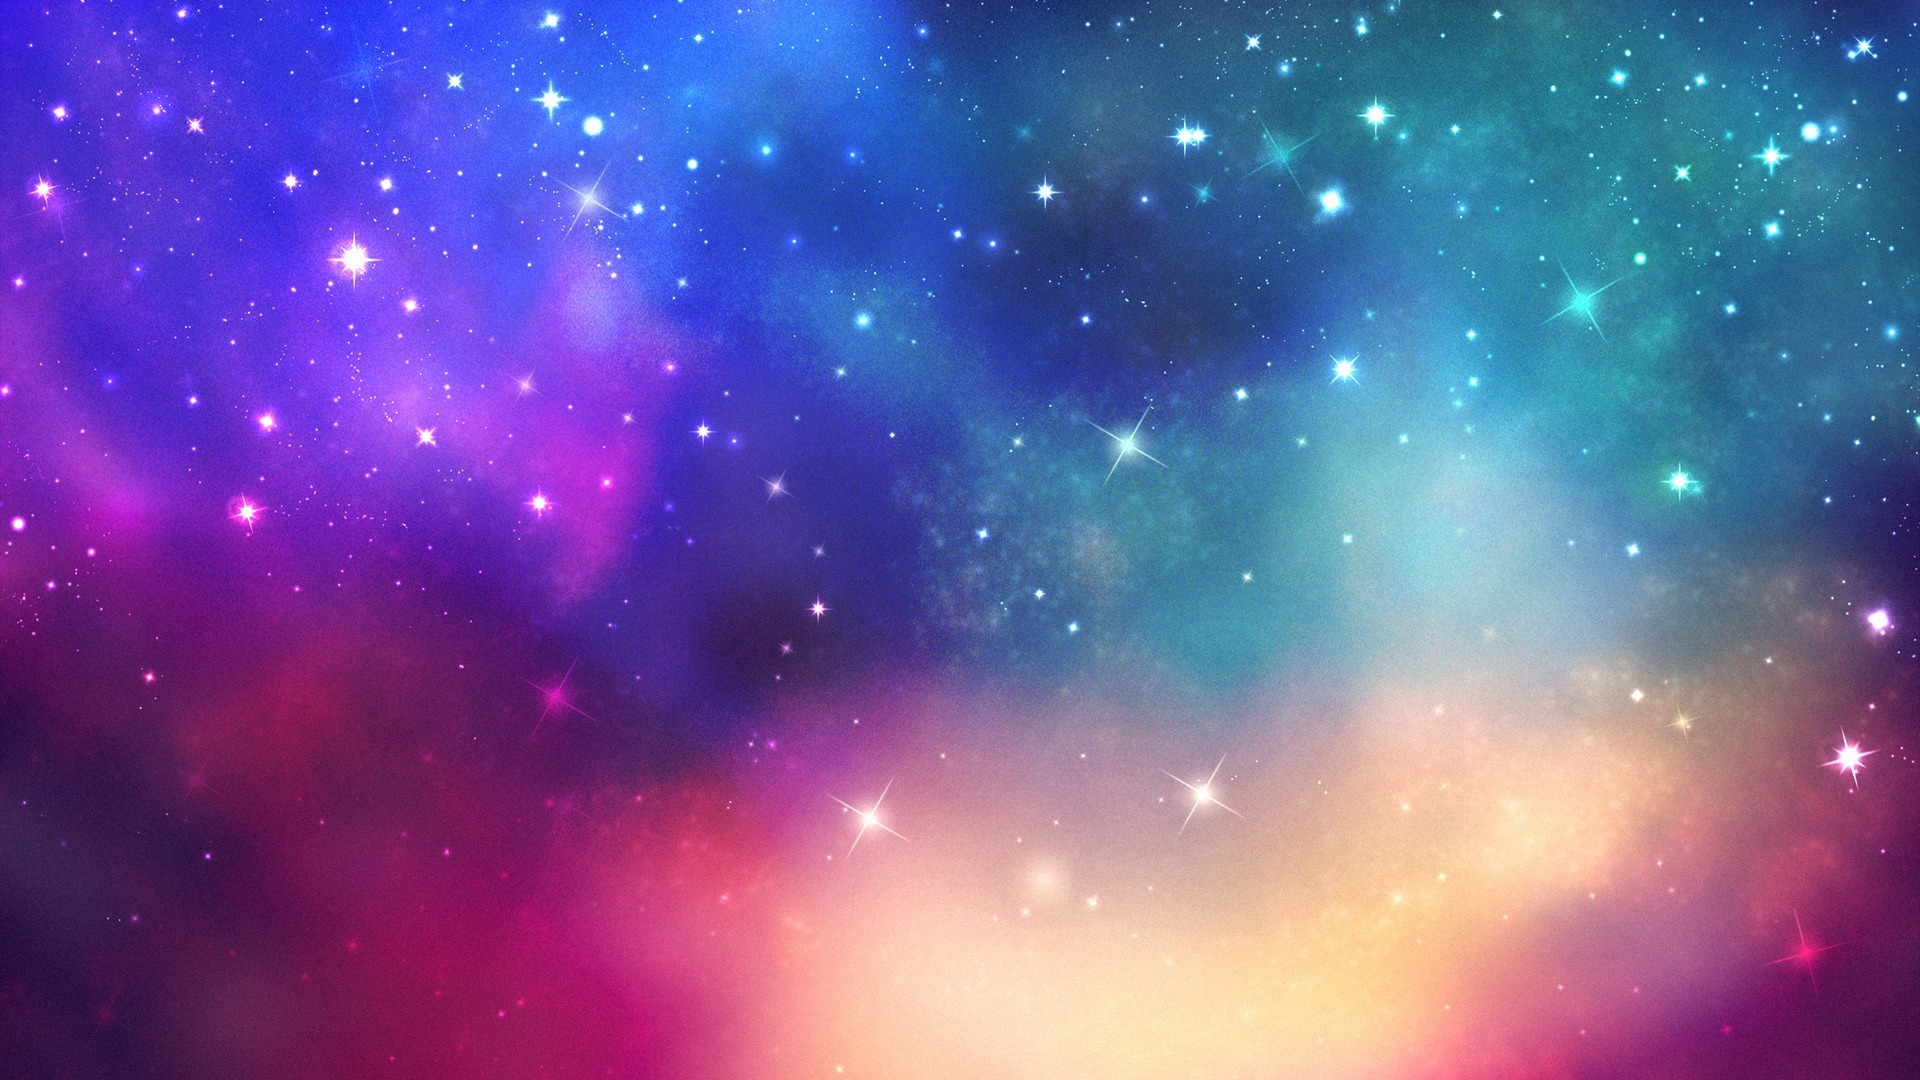 stars space wallpaper colors light mvcmlqa68 7dllnsn